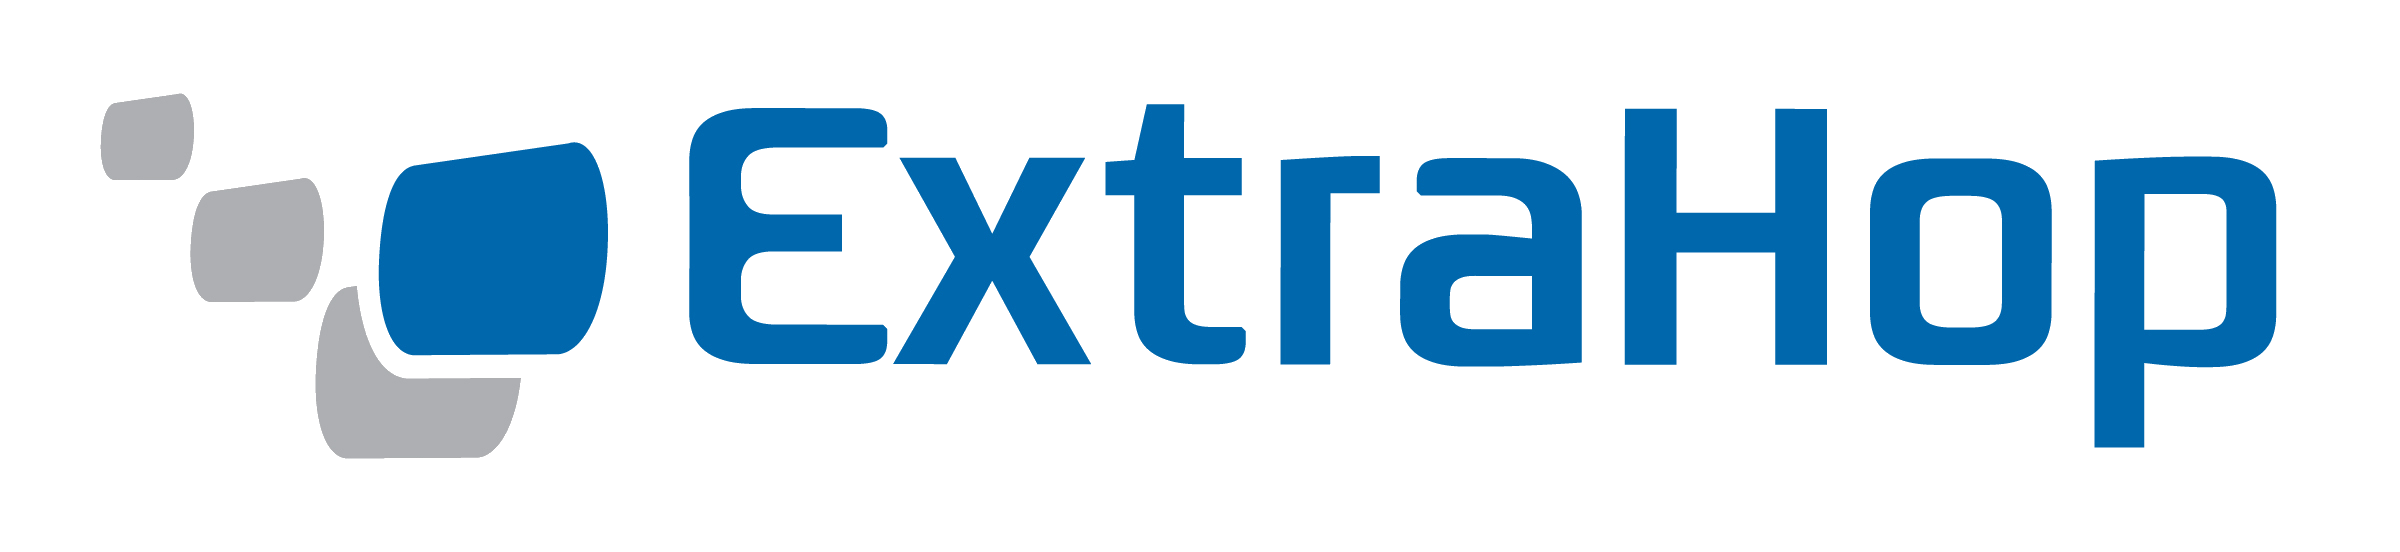 extrahop-logo.png